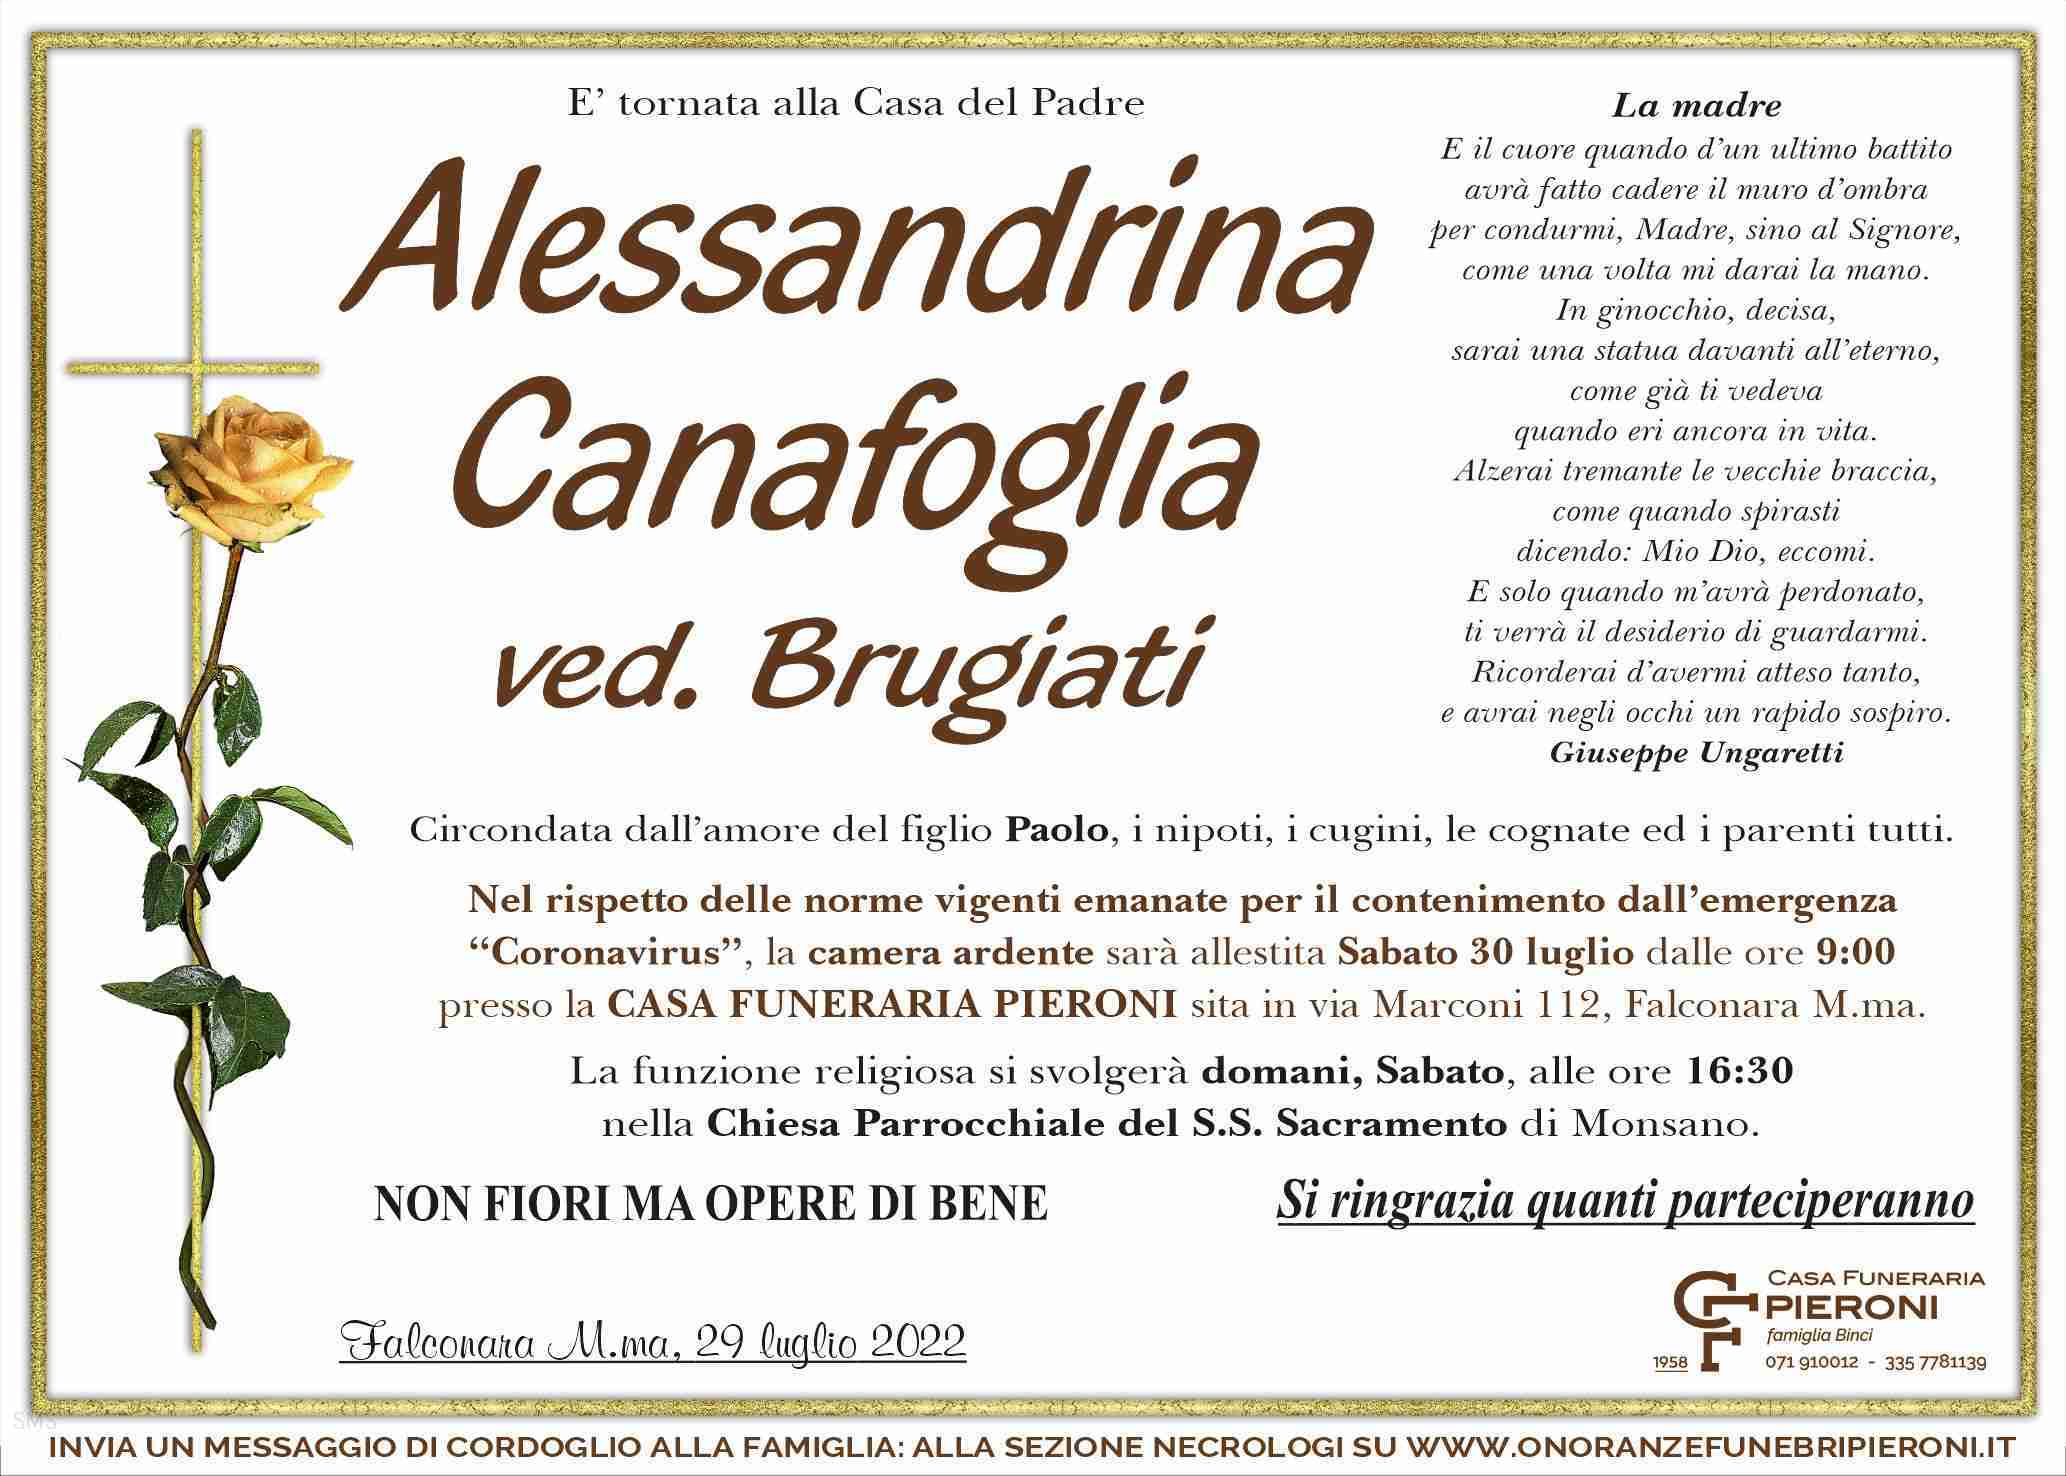 Alessandrina Canafoglia